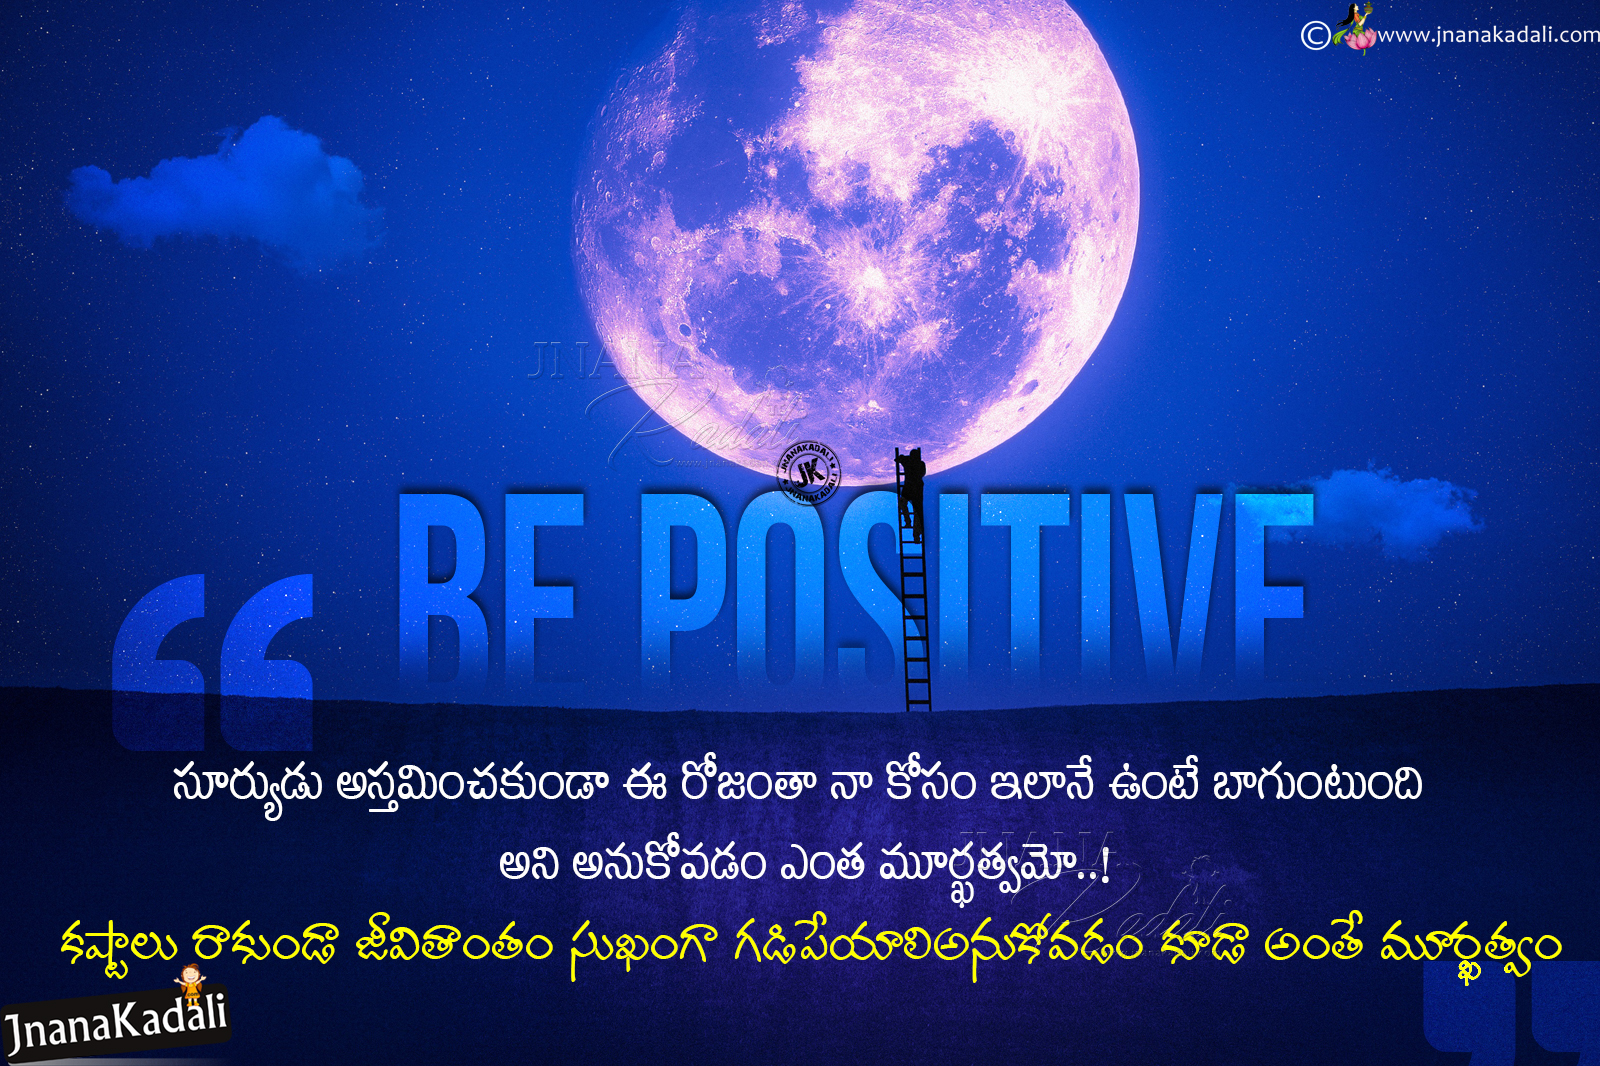 Best Telugu Top Positive Attitude Quotes HD Wallpaper Motivational Positive Messages In Telugu. JNANA KADALI.COM. Telugu Quotes. English Quotes. Hindi Quotes. Tamil Quotes. Dharmasandehalu